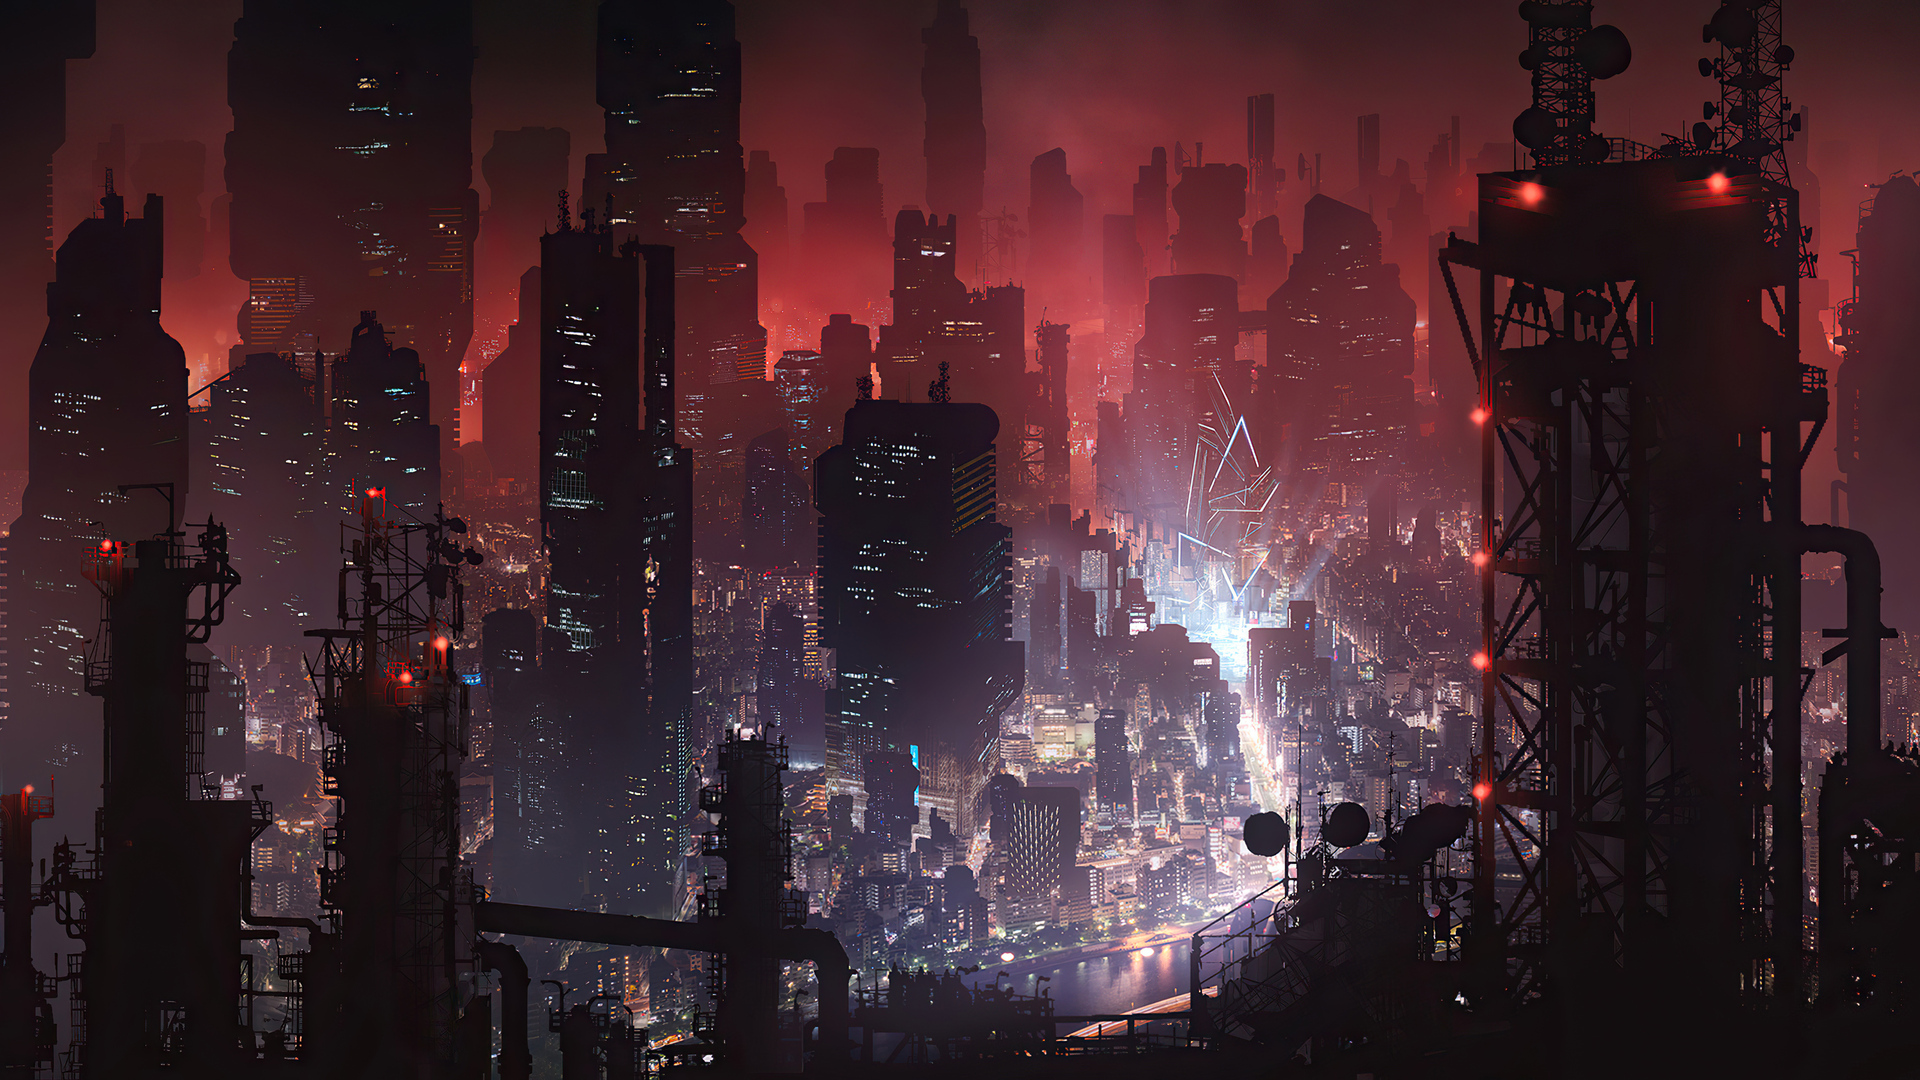 cyberpunk-city-night-view-4k-8l-1920x1080.jpg